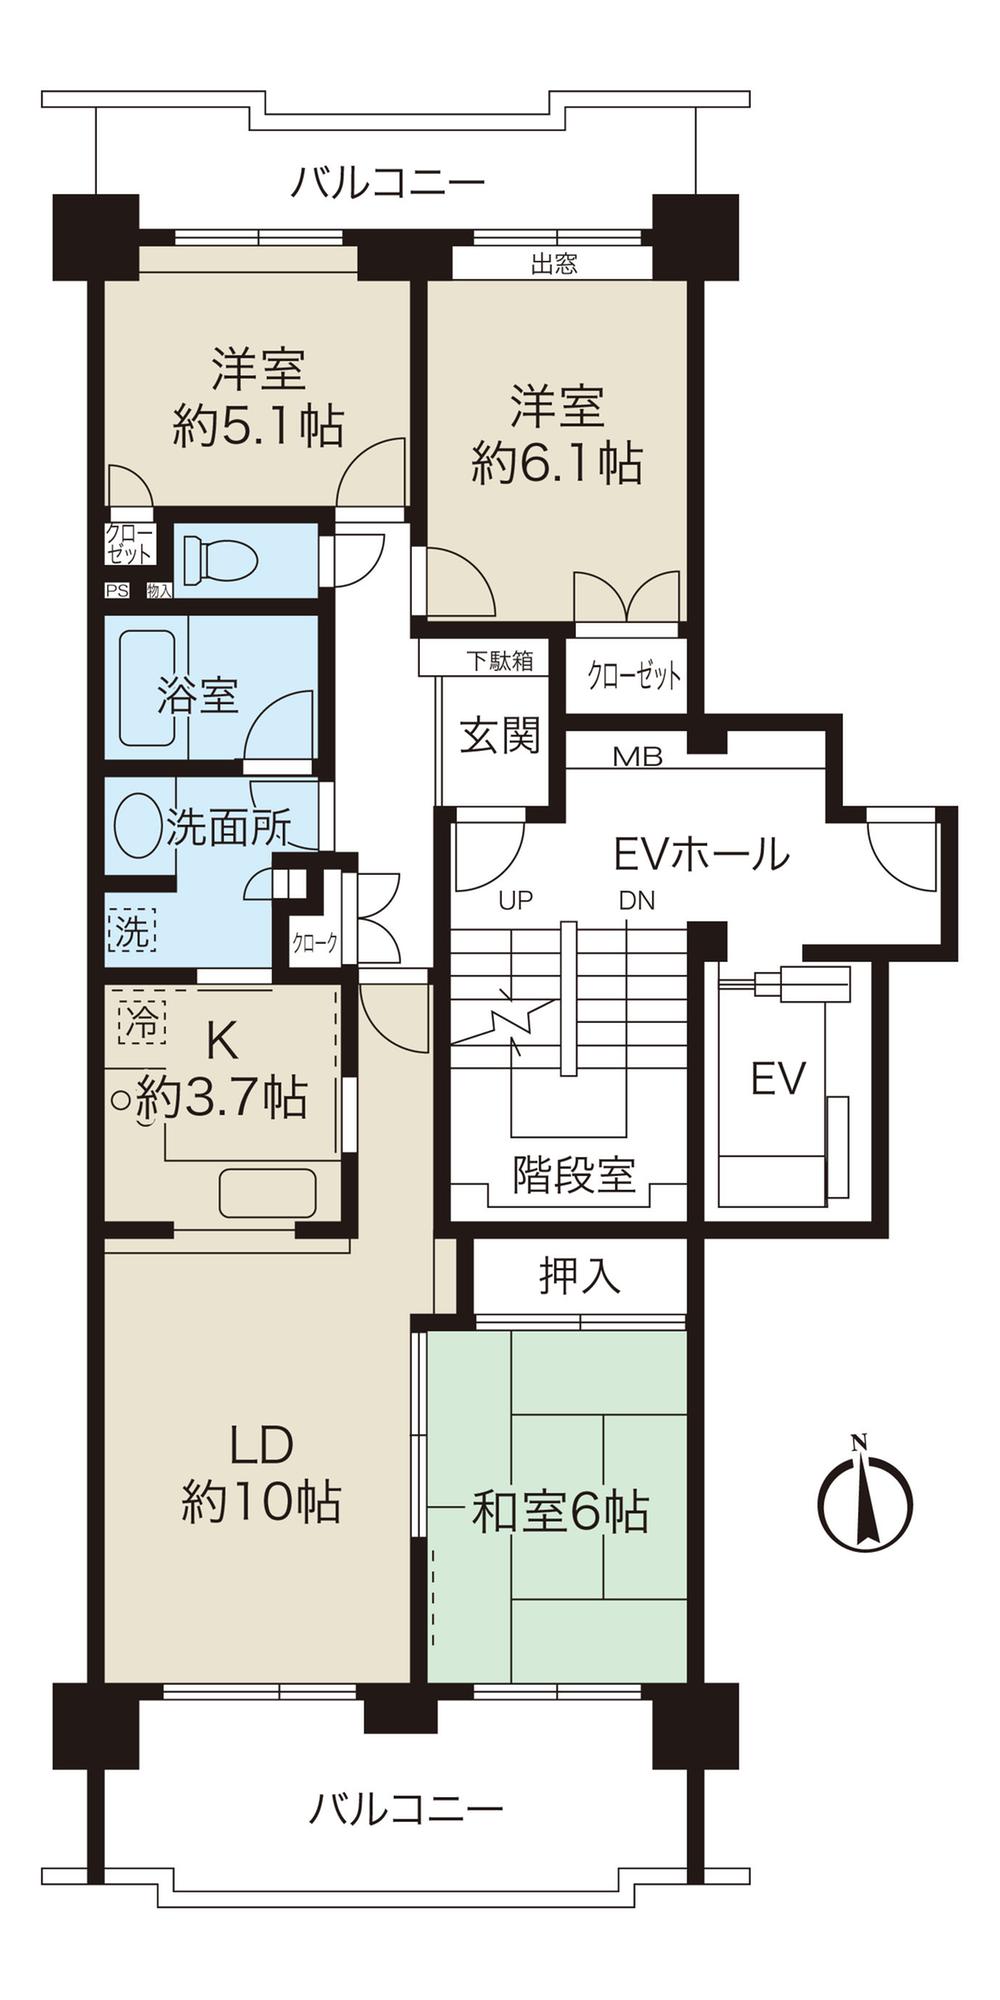 Floor plan. 3LDK, Price 27.6 million yen, Occupied area 69.77 sq m , Balcony area 19.77 sq m